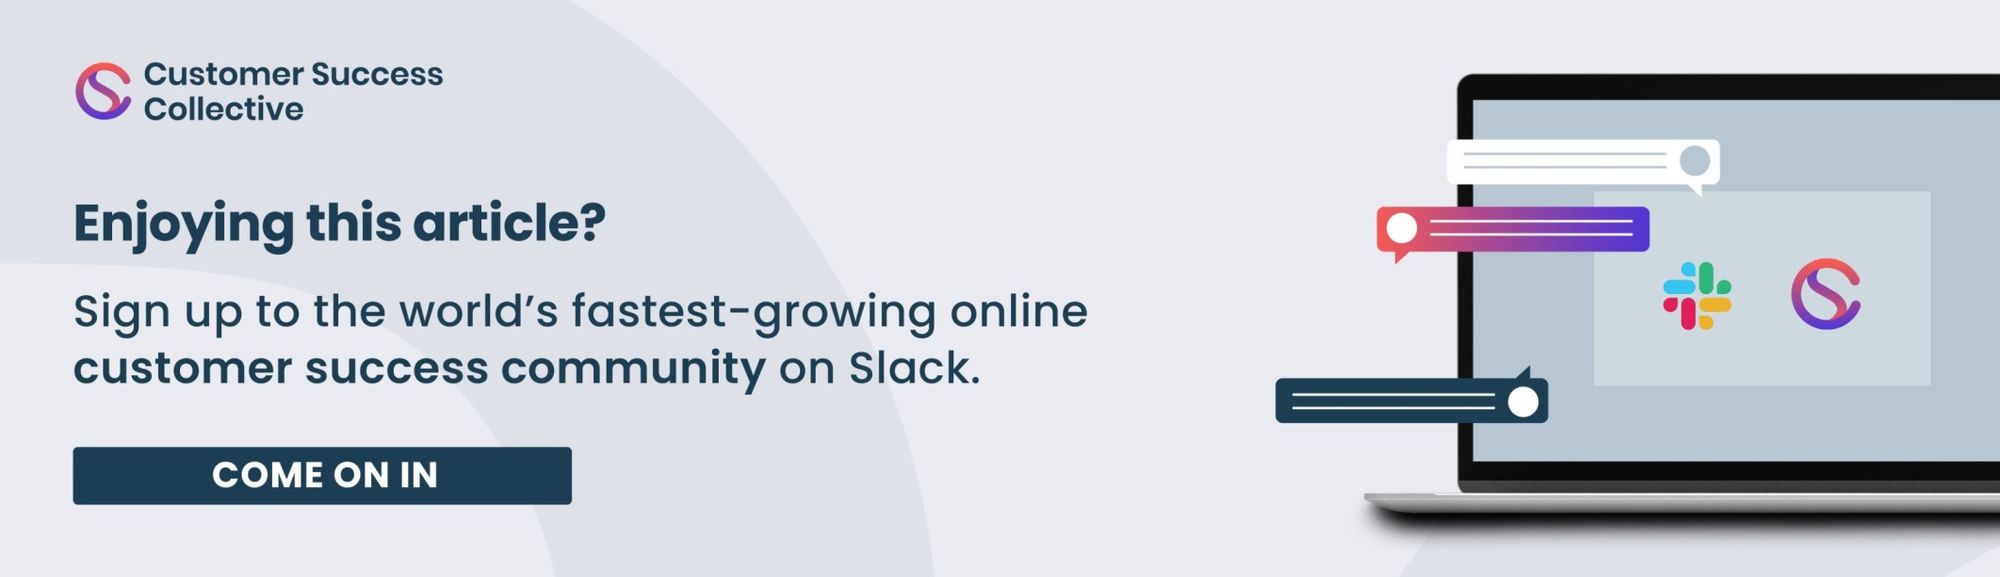 Customer Success Collective community on Slack